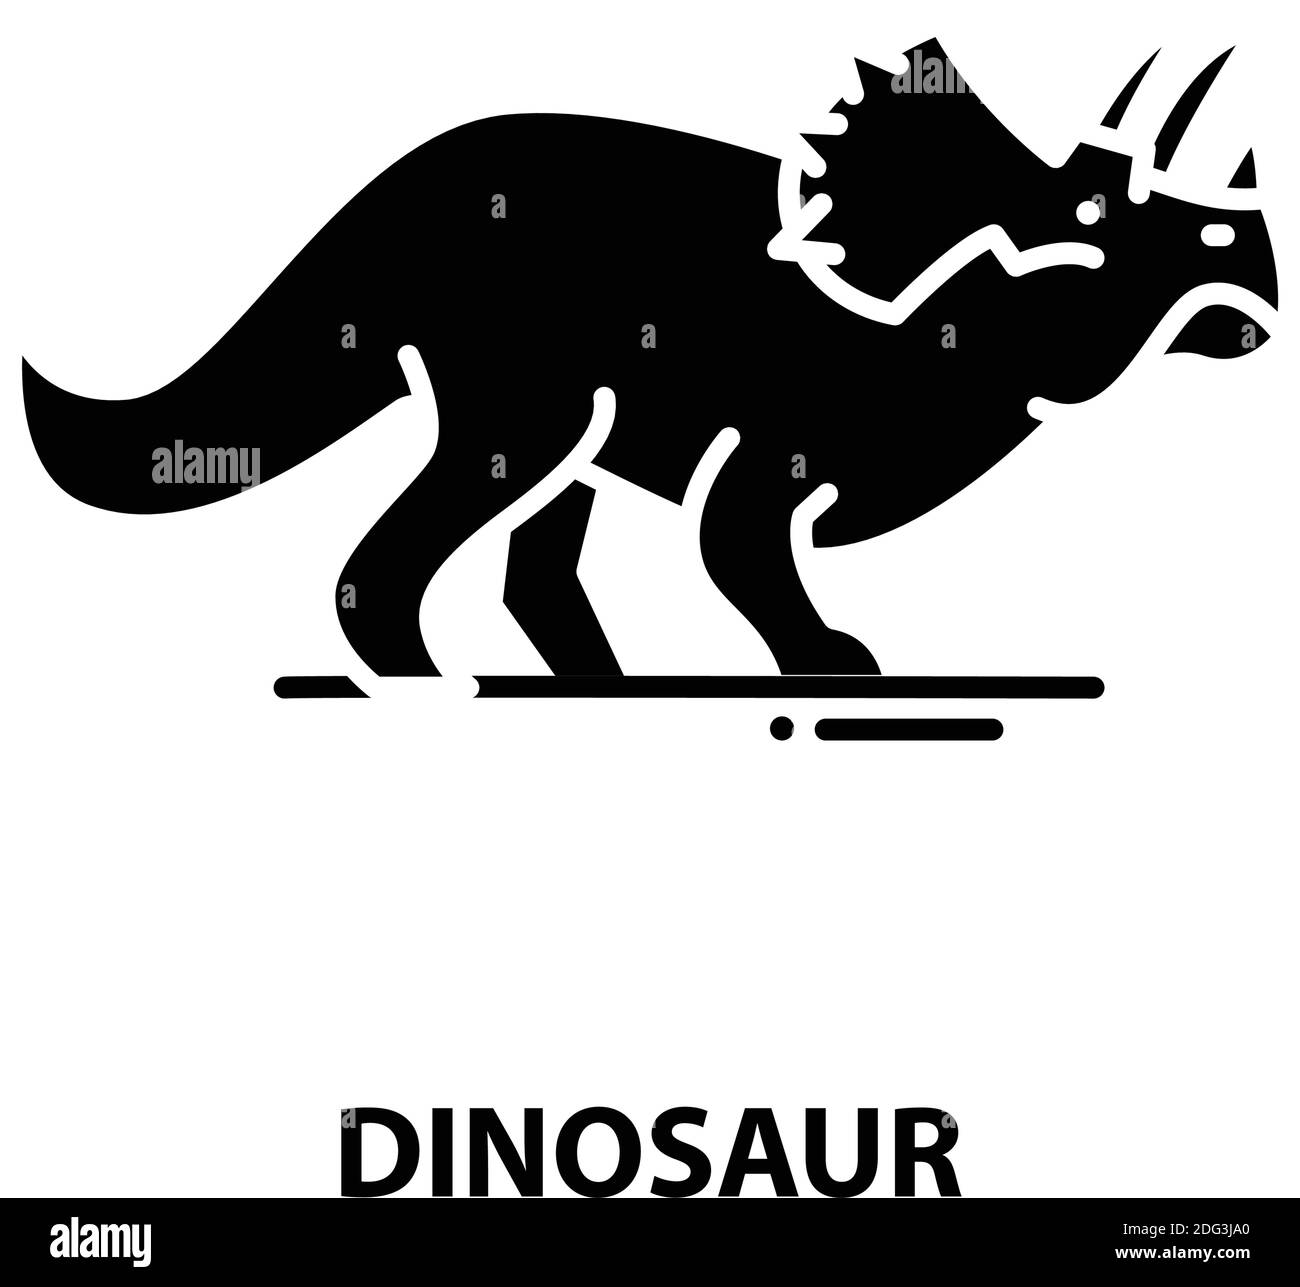 dinosaur symbol icon, black vector sign with editable strokes, concept illustration Stock Vector